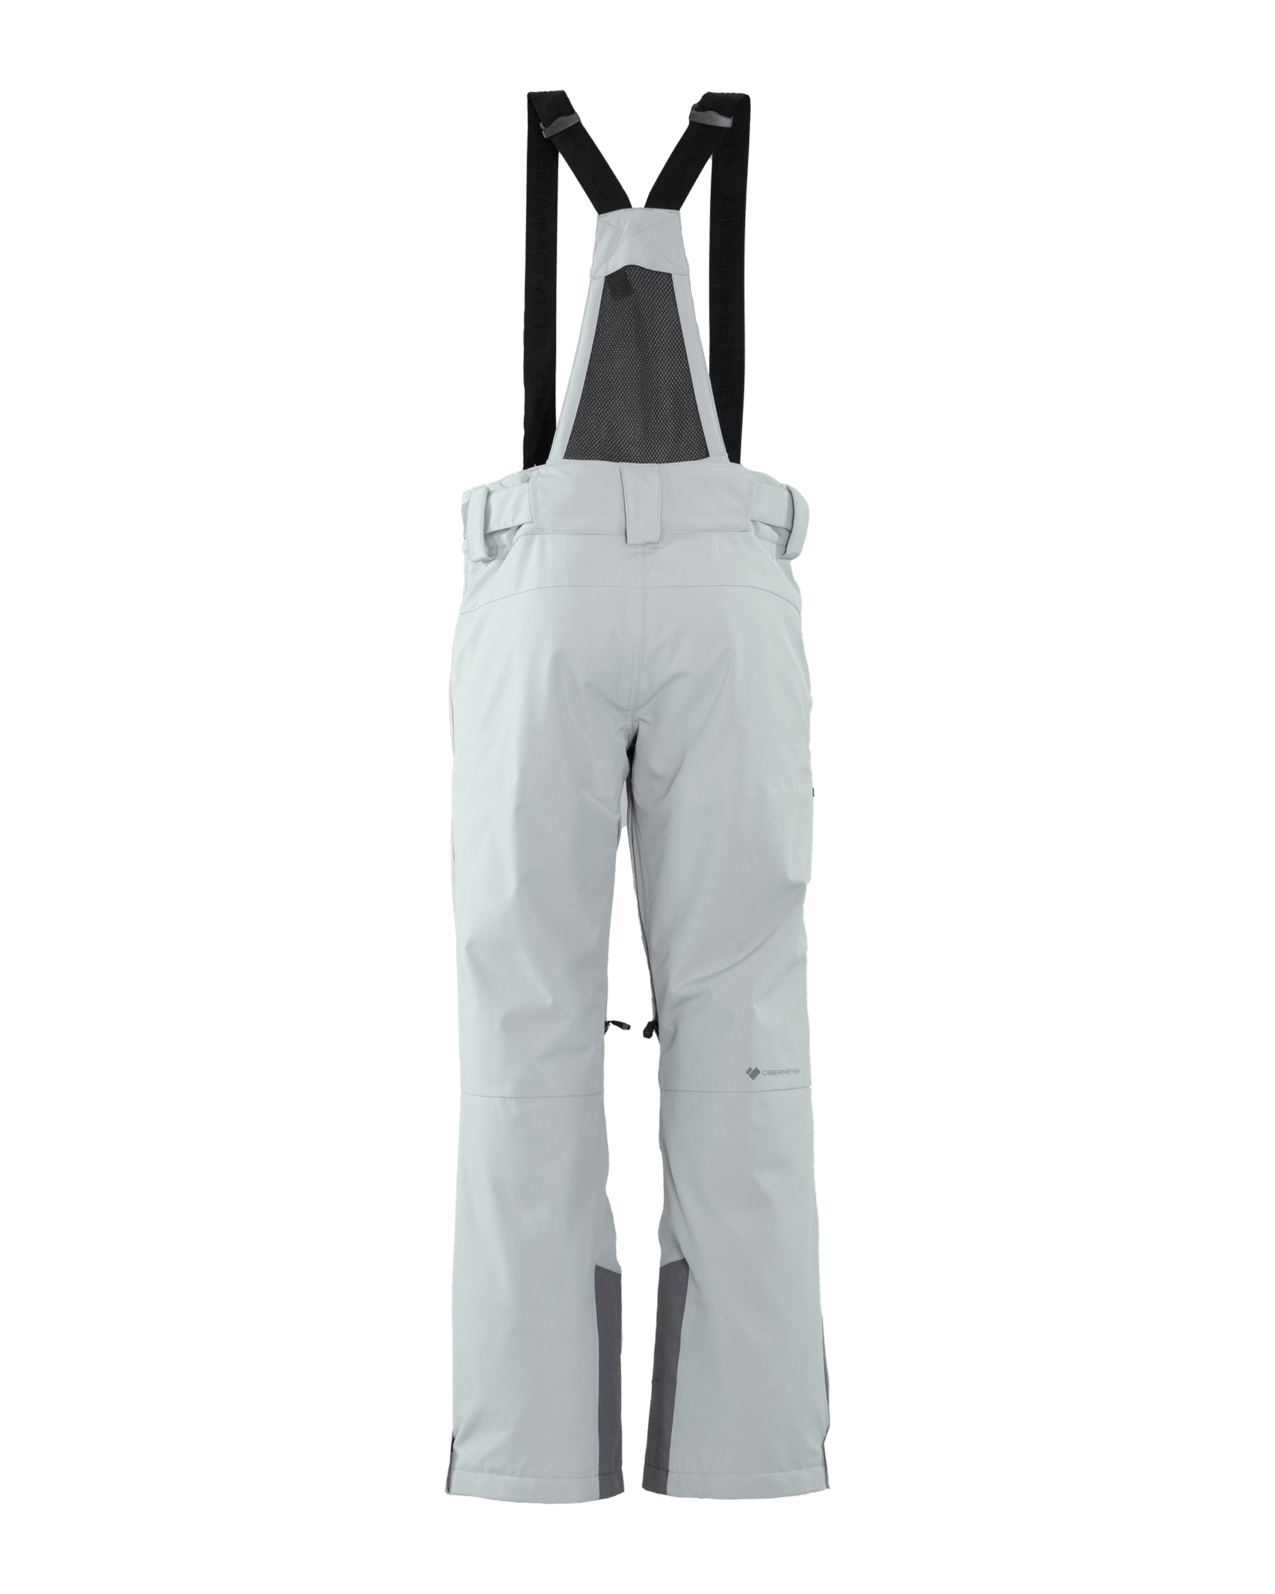 Obermeyer Men's Force Suspender Pants | Curated.com